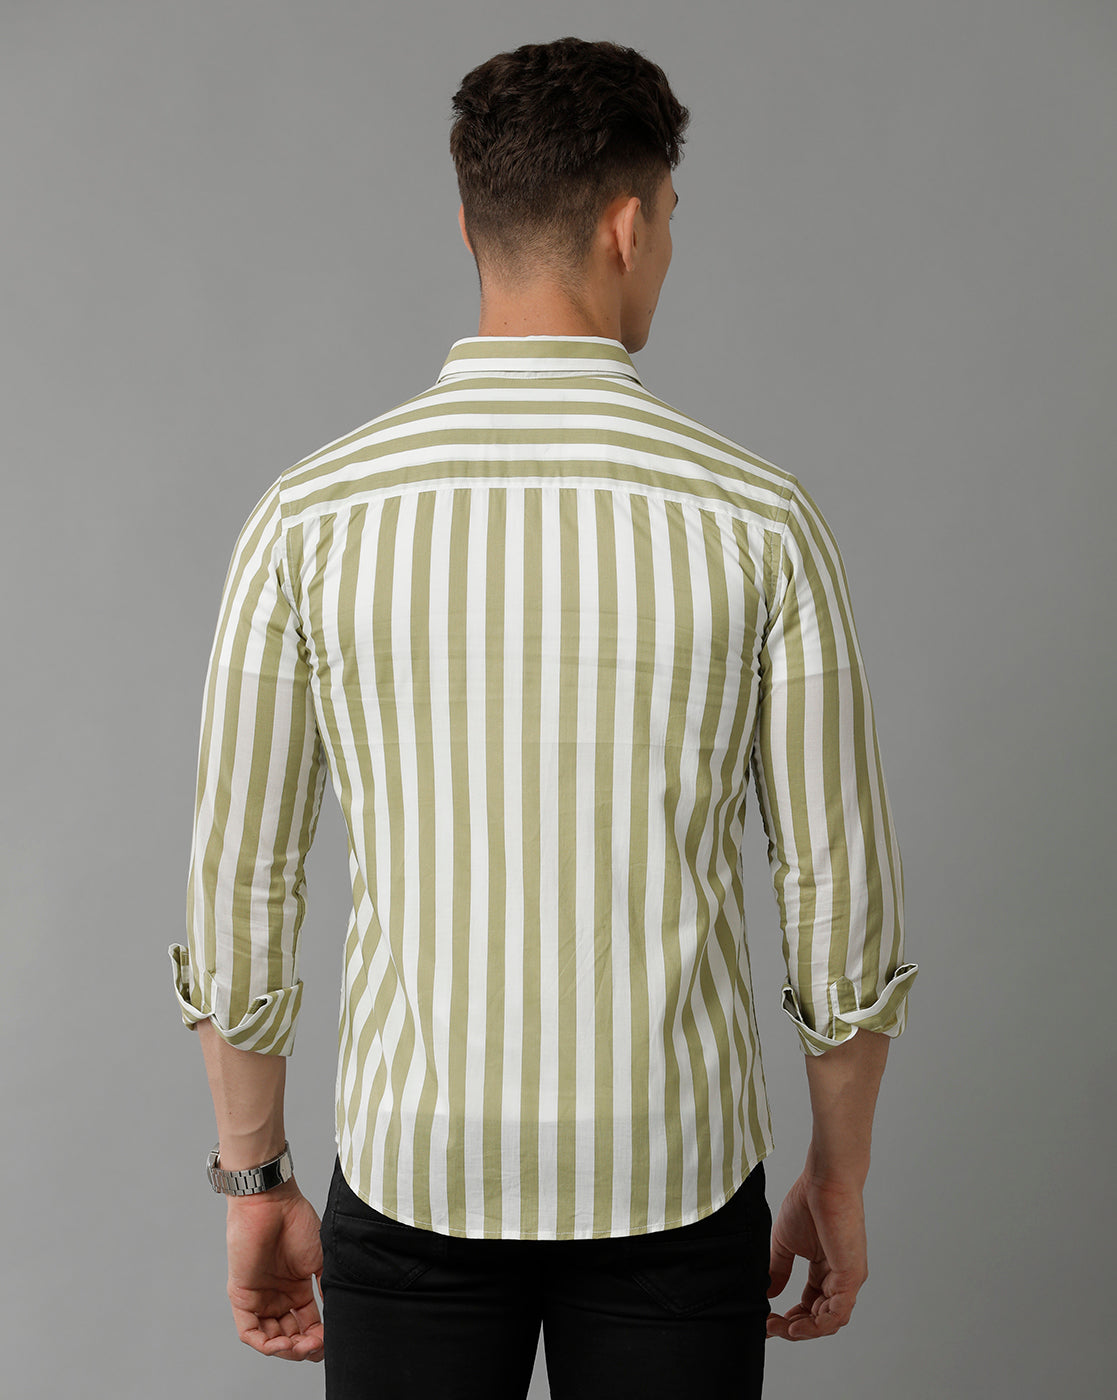 Vertical striped shirt full sleeve